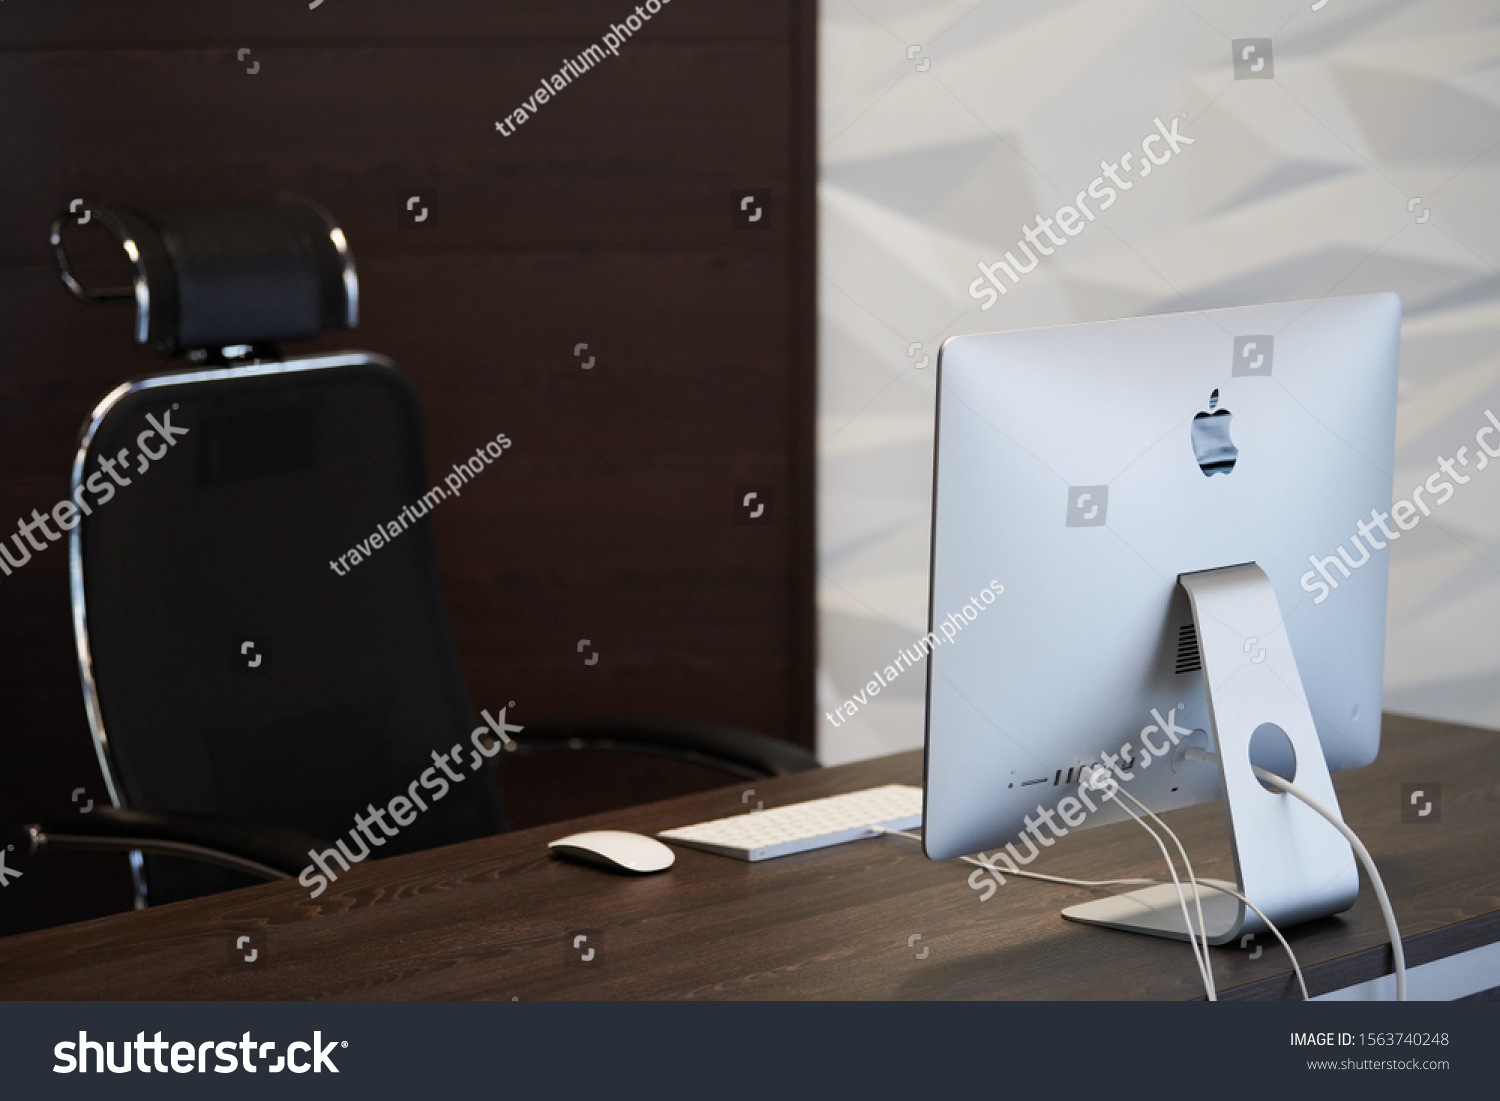 Modern Workplace Apple Imac Computer Office Stockfoto Jetzt